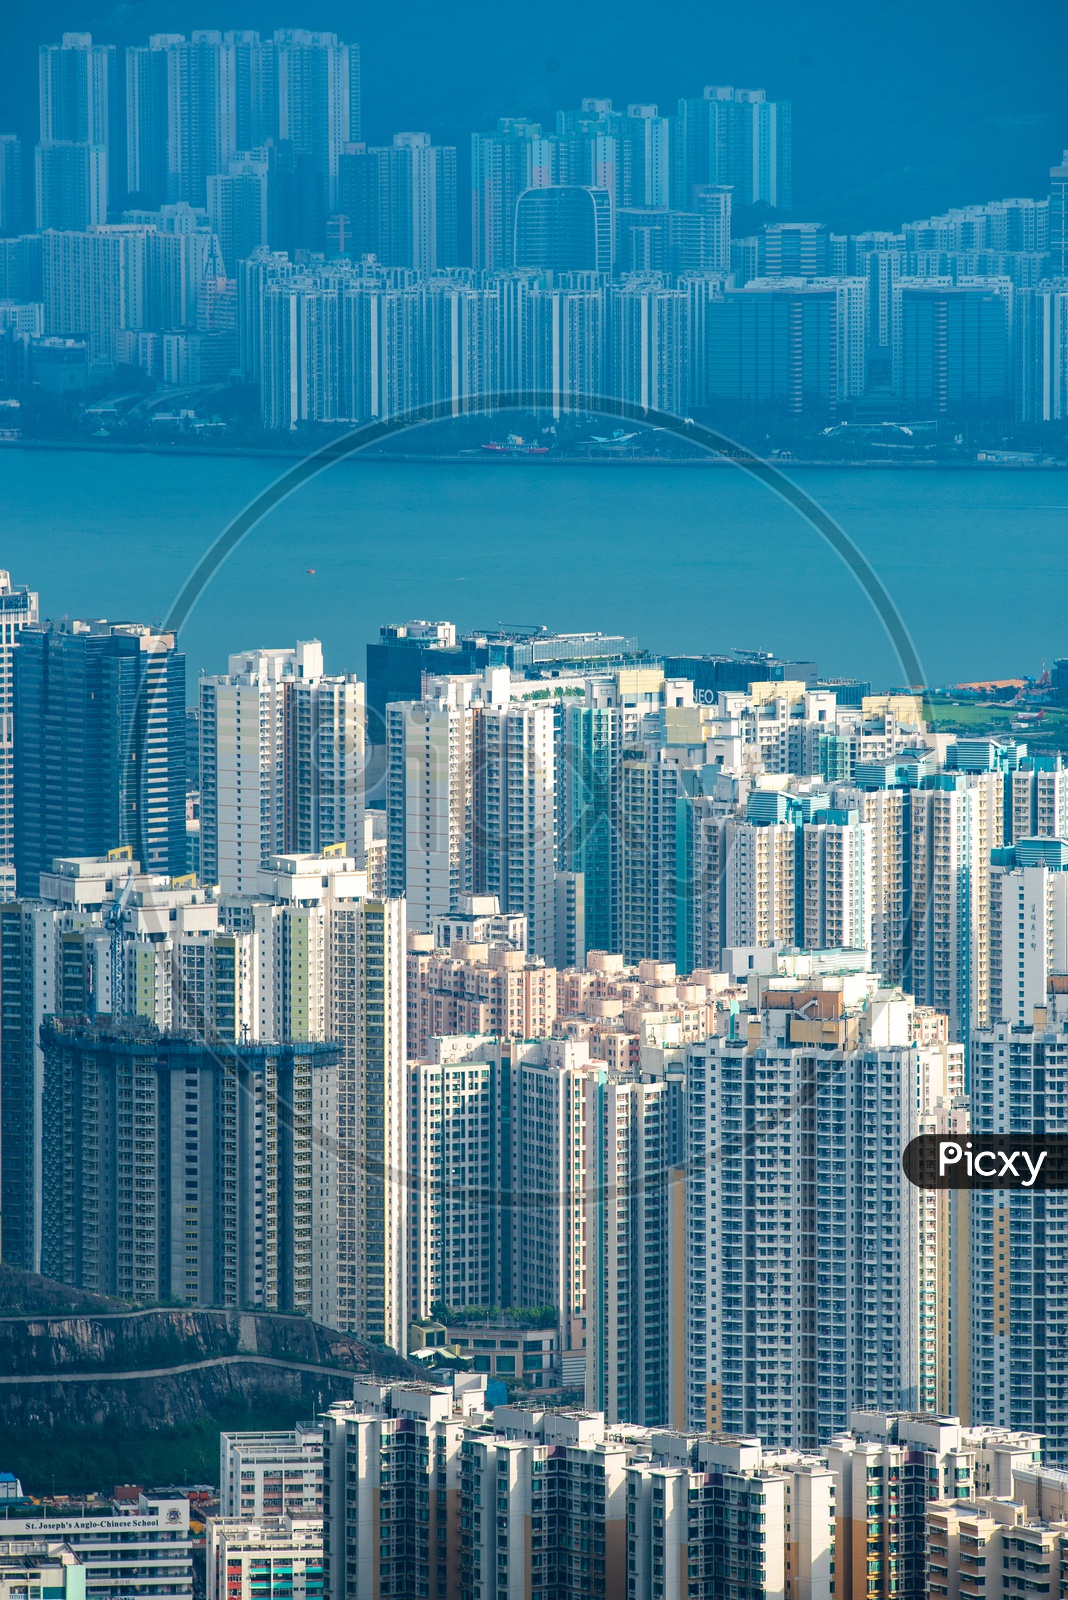 bird's eye view of Hong Kong City With Sky Scrapers